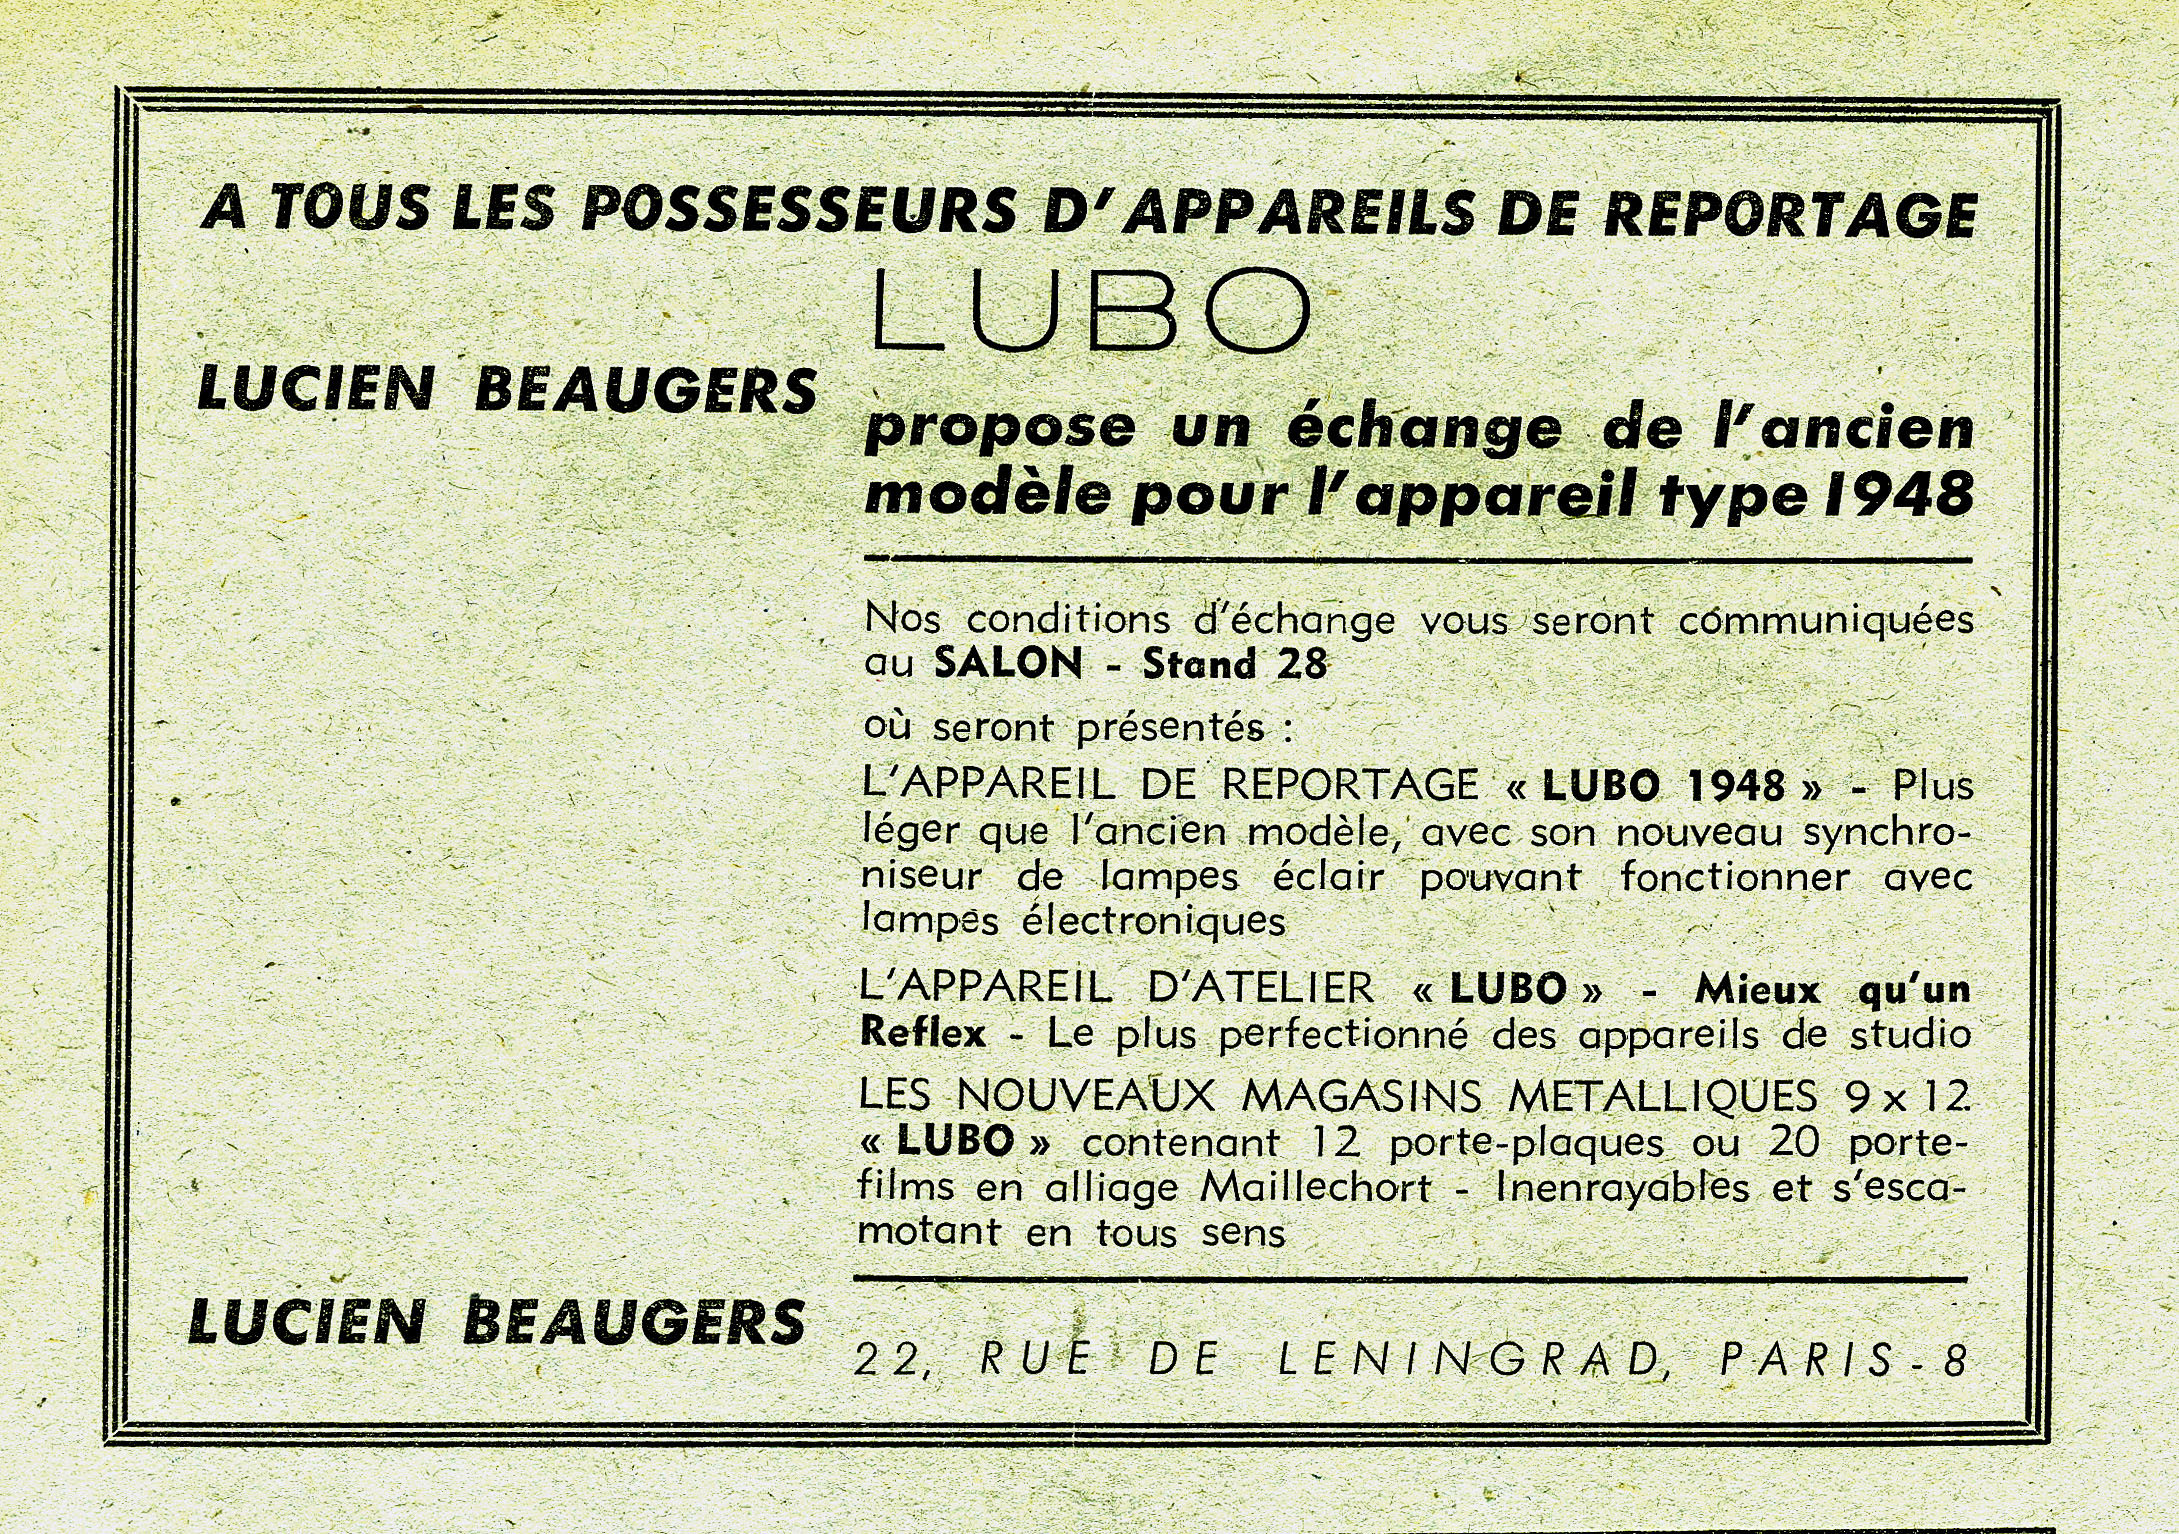 Wallpaper 2154-21  BEAUGERS  Lucien  Lubo facade alu 9X12, collection AMI Appareils photos